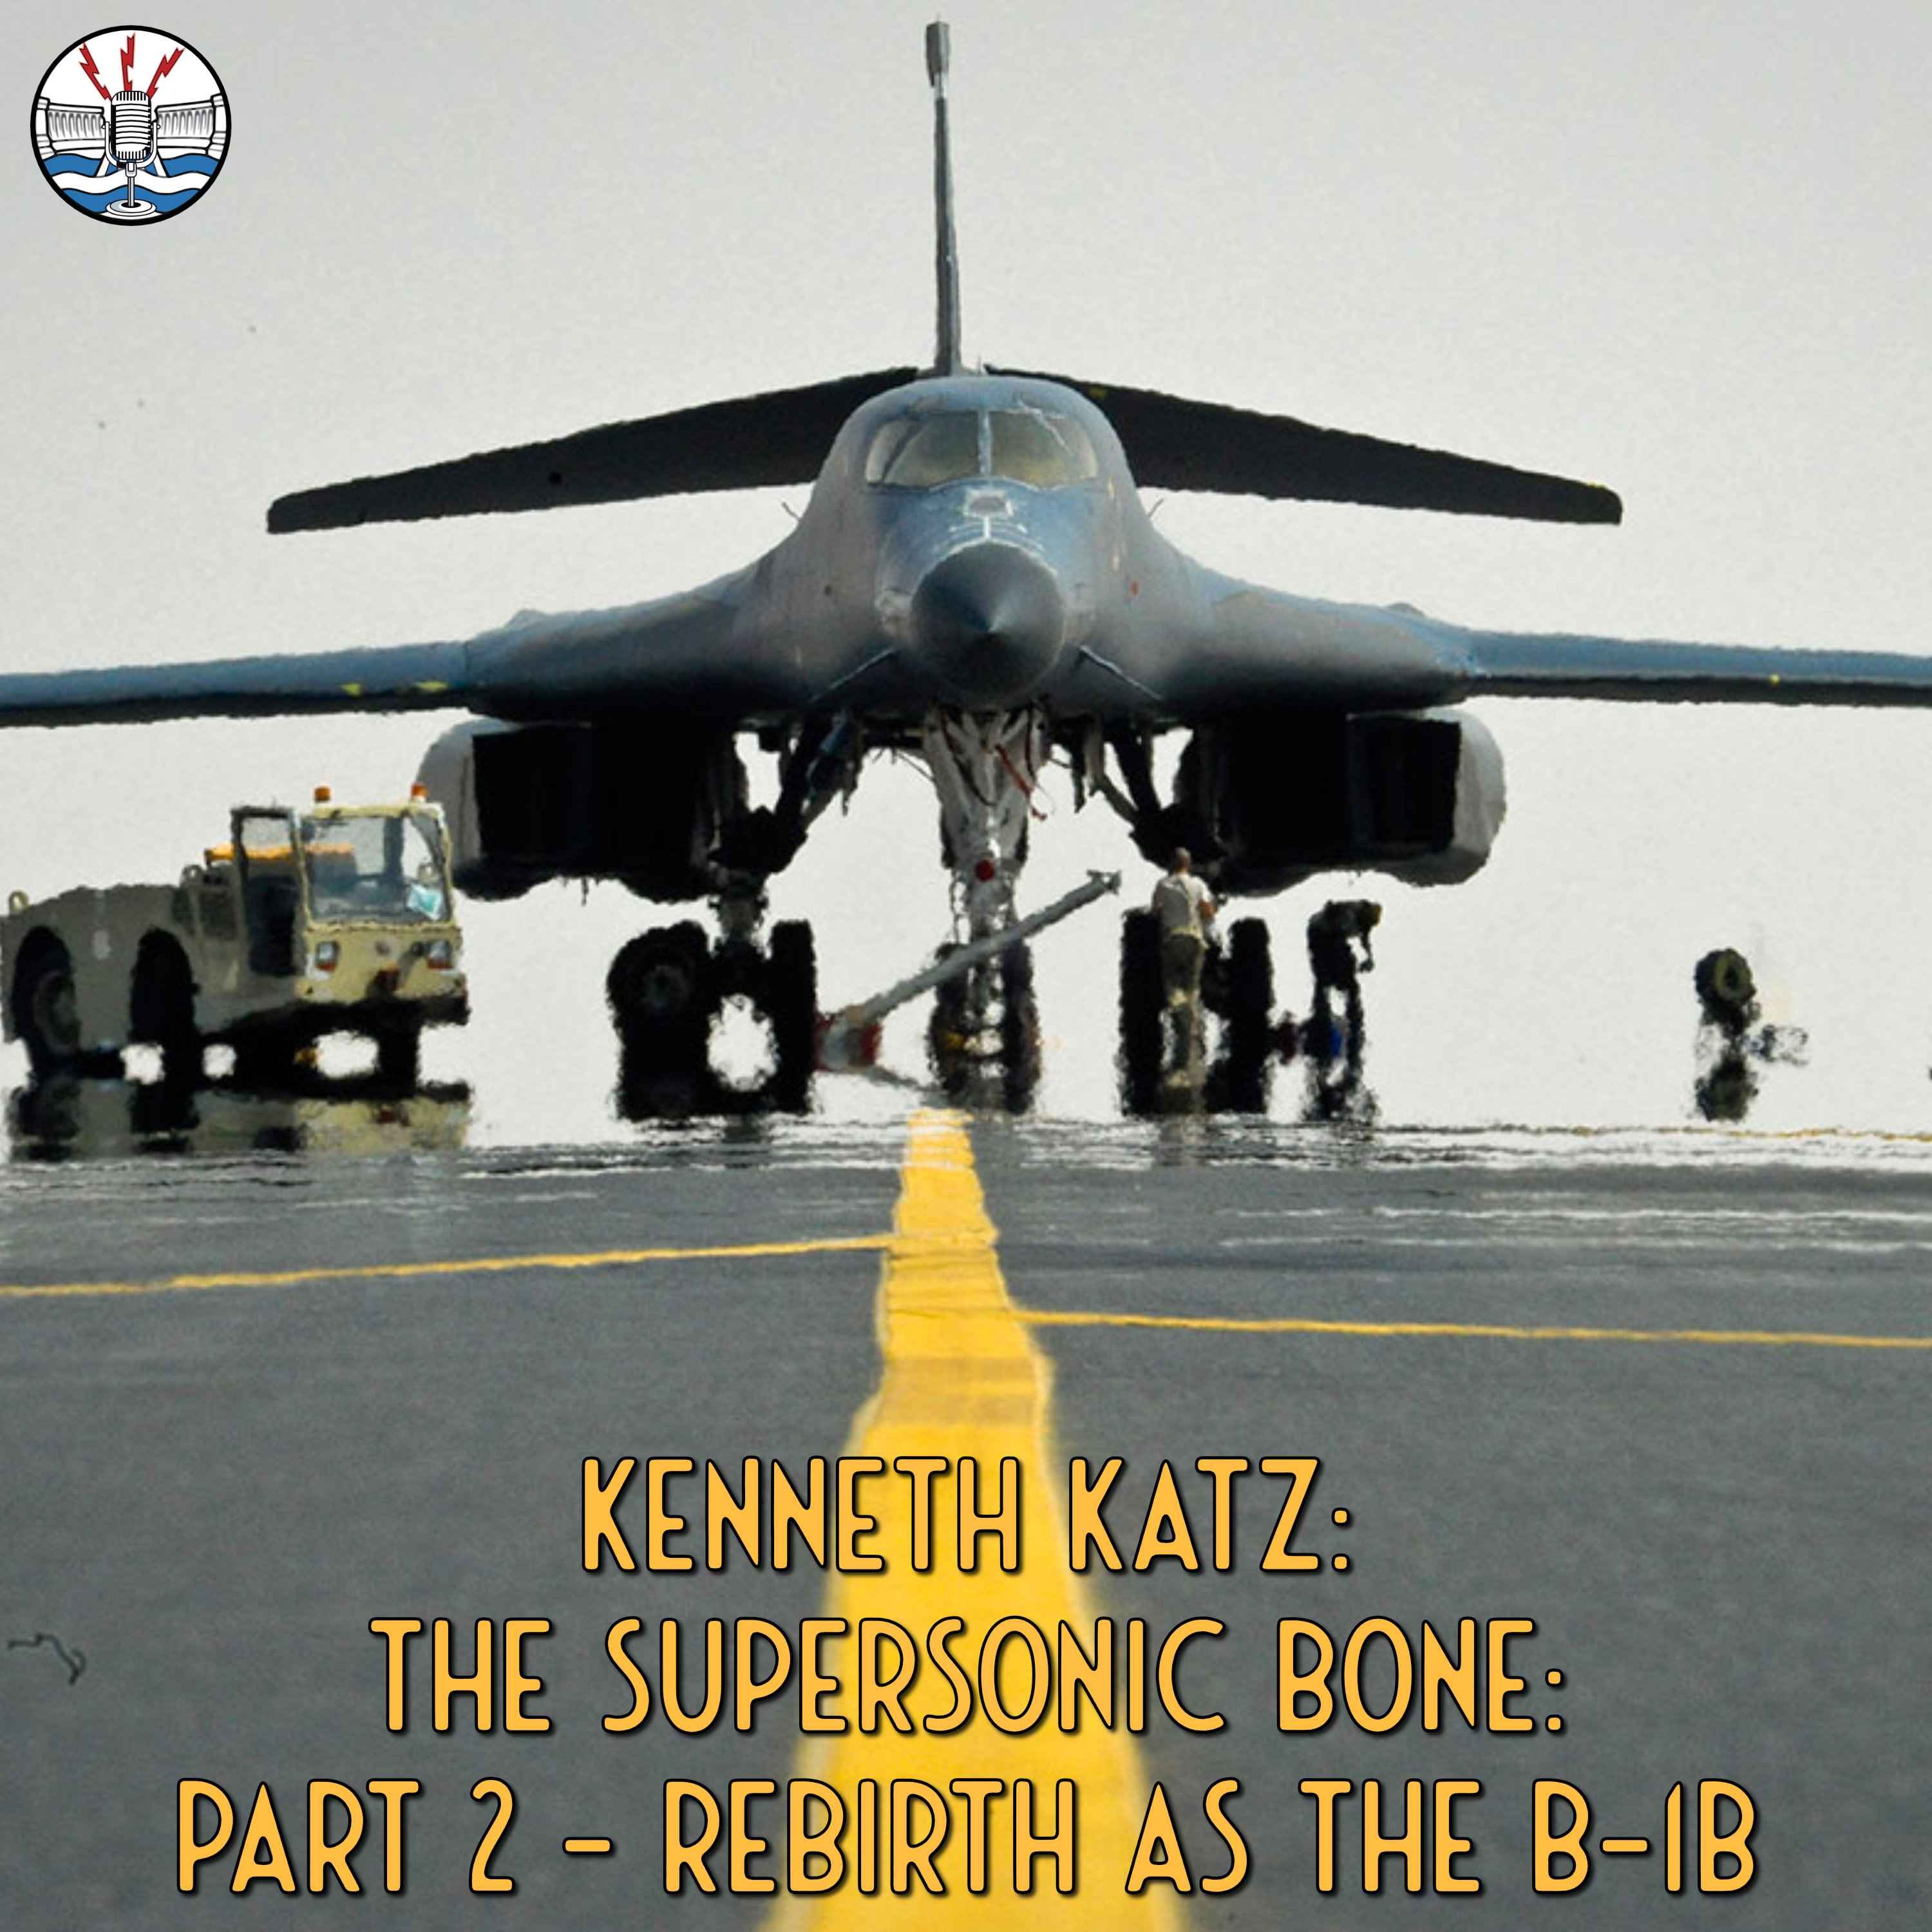 Kenneth Katz: The Supersonic BONE: Part 2 - Rebirth as the B-1B